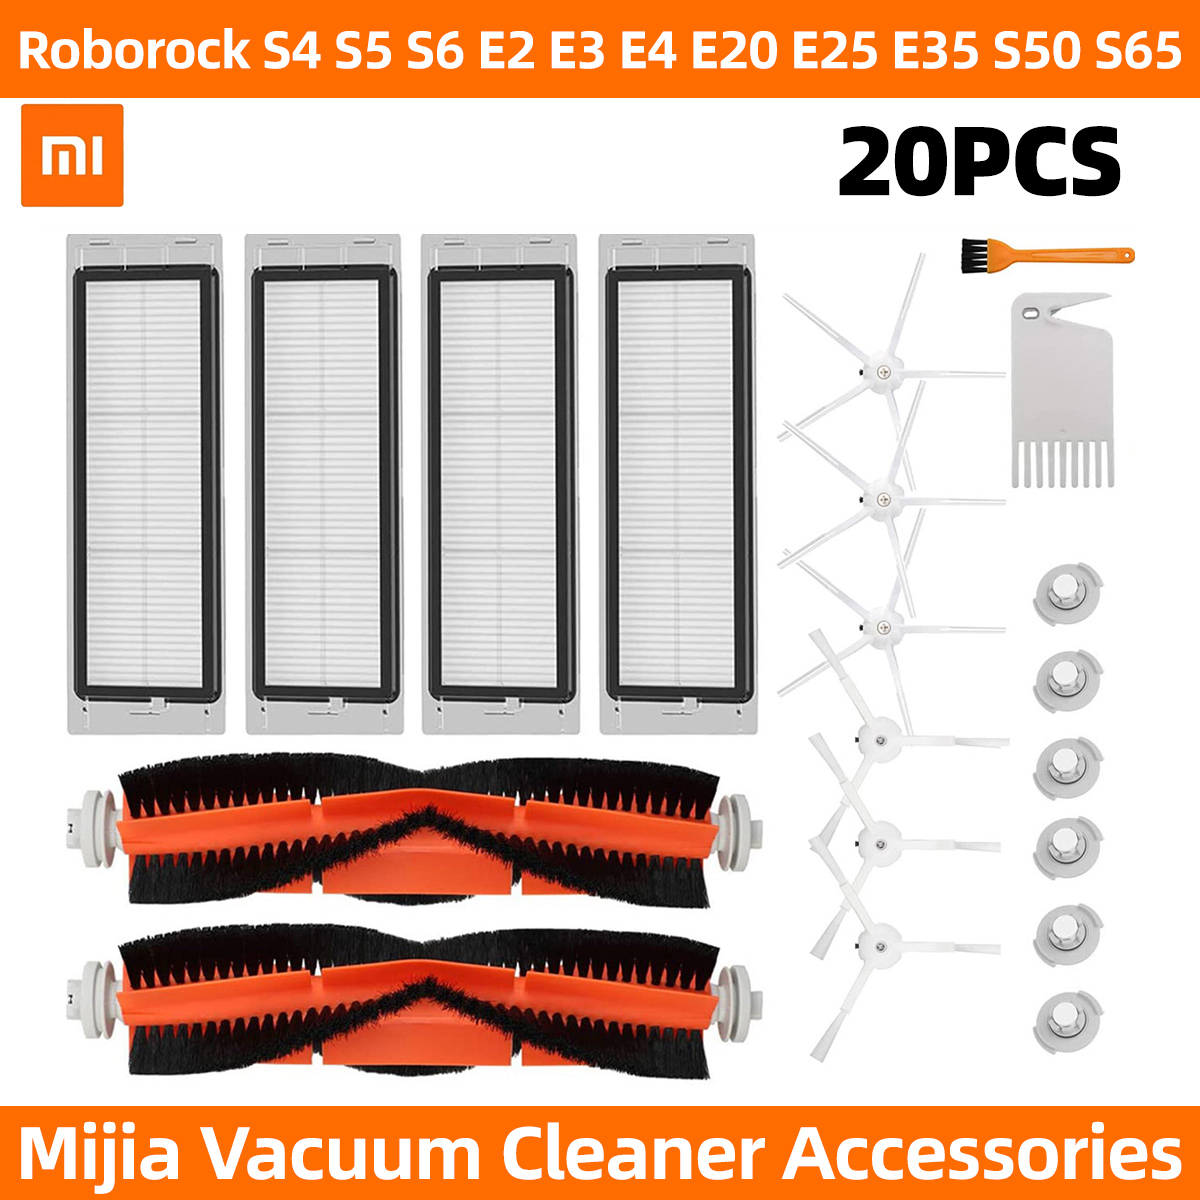 20pcs-Replacements-for-Roborock-S4-S5-S6-E4-E20-E25-E35-S50-S65-Xiaomi-Mi-Mijia-Robotic-Vacuum-Clean-1944163-2